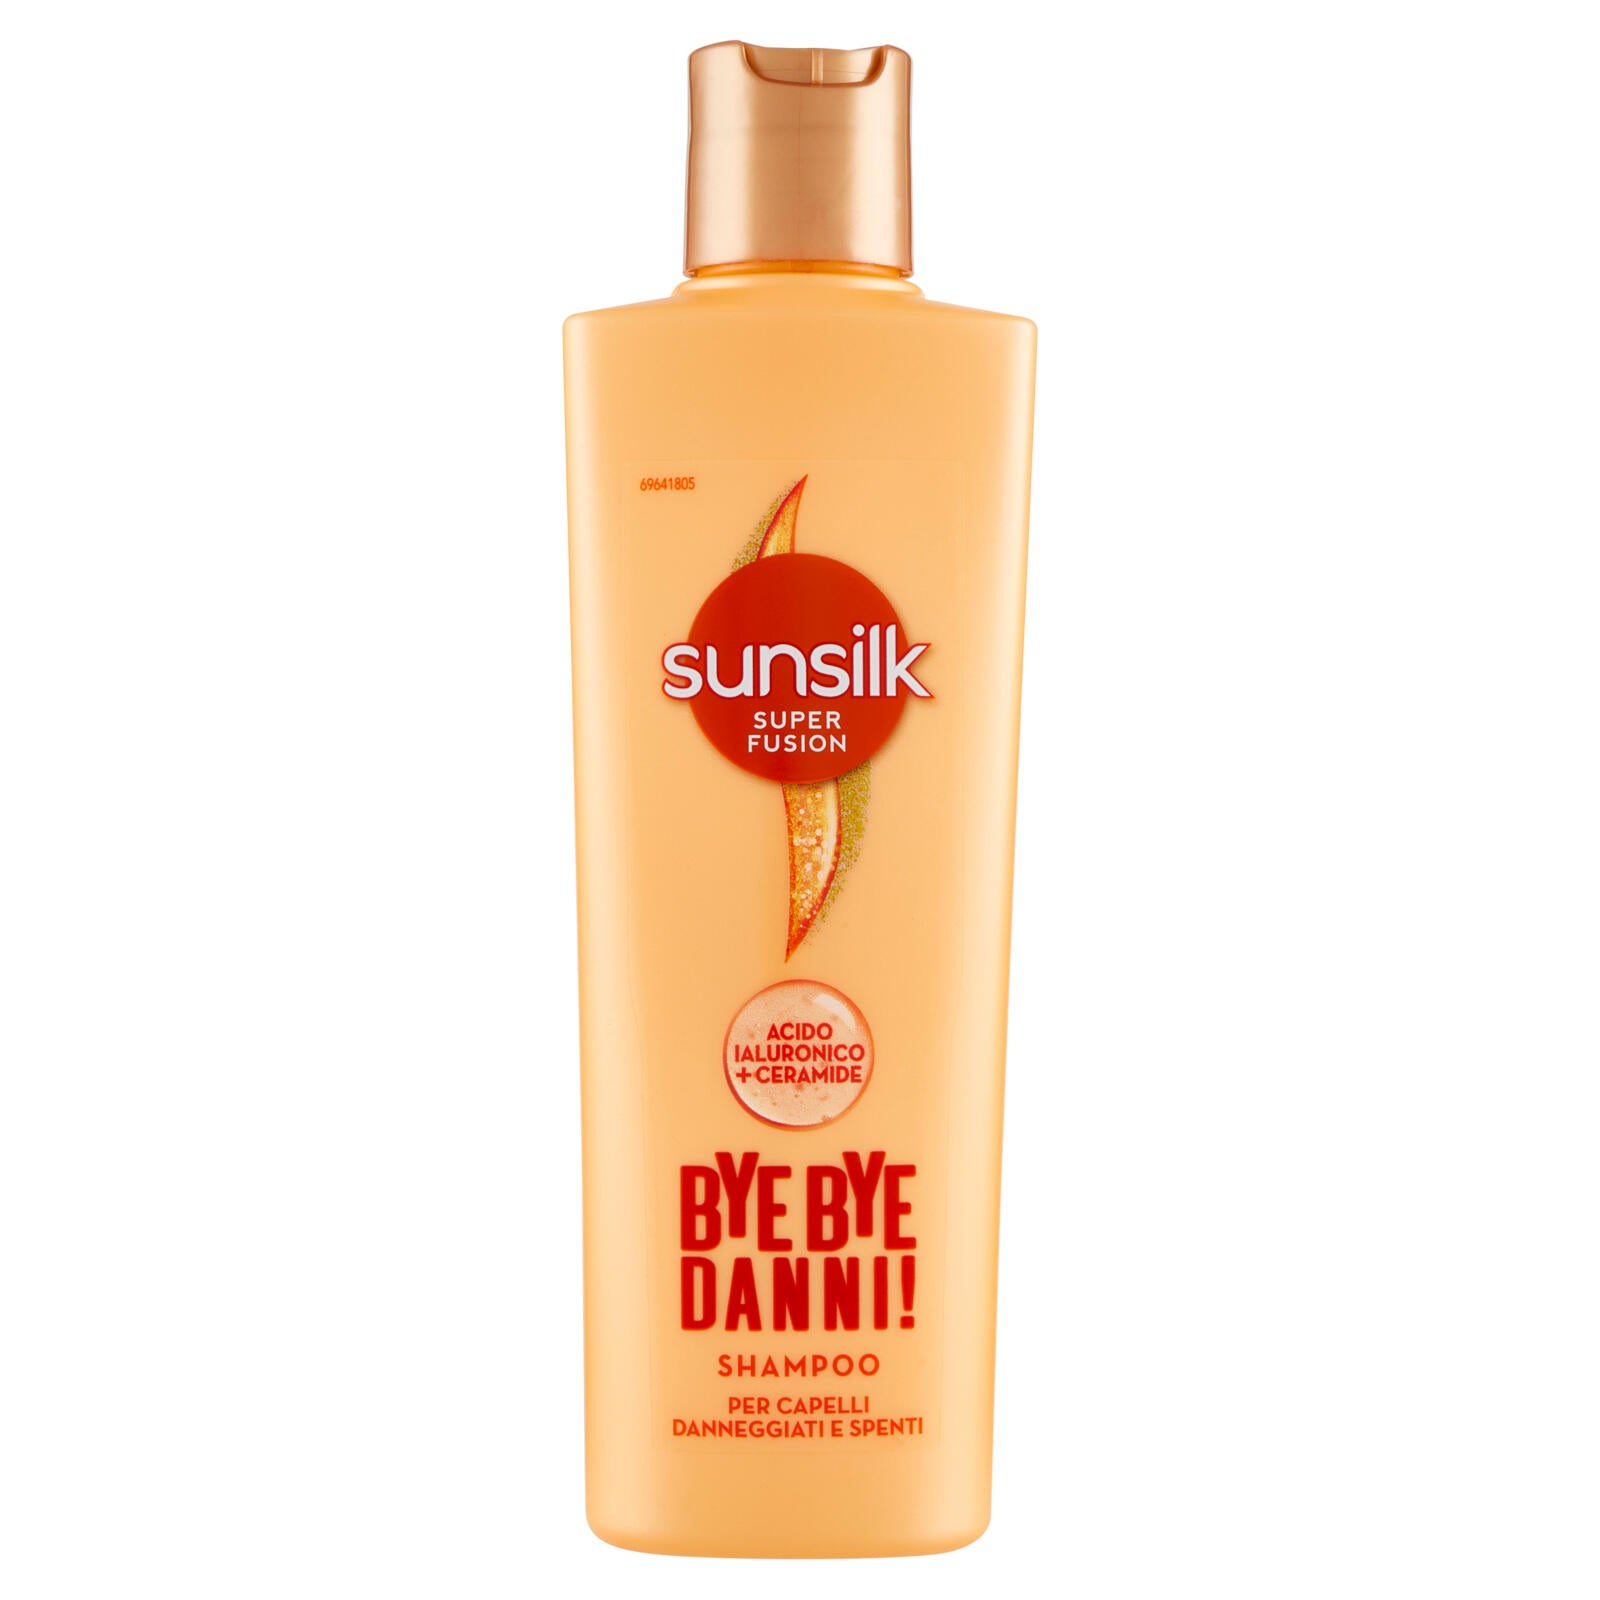 sunsilk Super Fusion Bye Bye Danni! Shampoo per Capelli Danneggiati e Spenti 220 ml